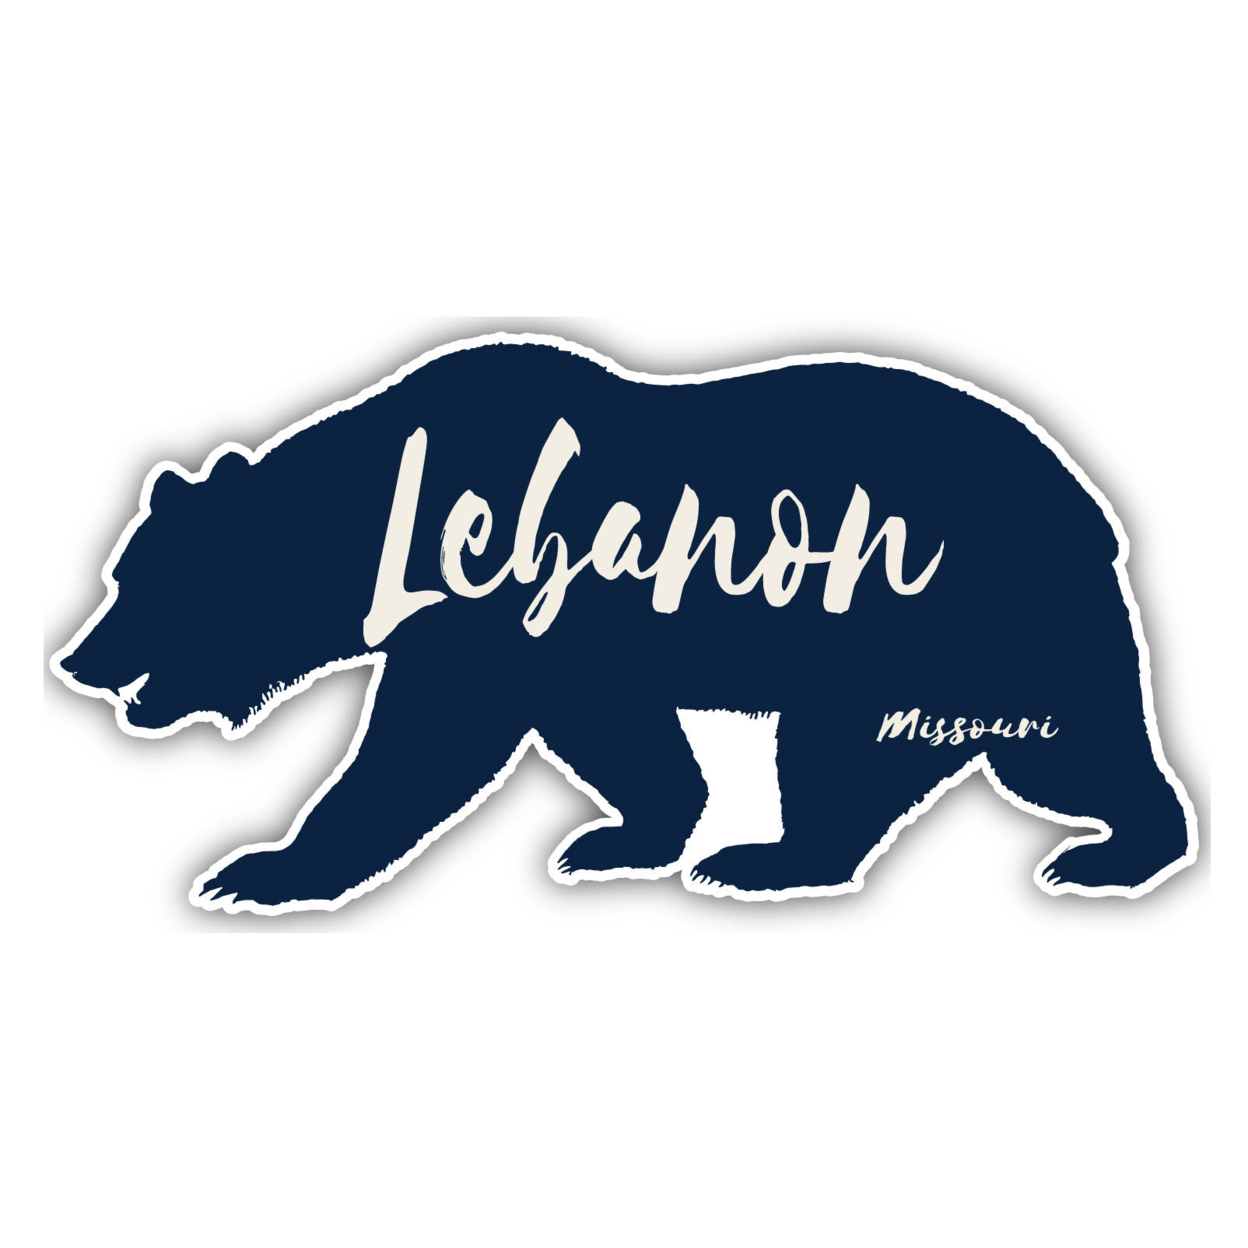 Lebanon Missouri Souvenir Decorative Stickers (Choose Theme And Size) - 2-Inch, Camp Life